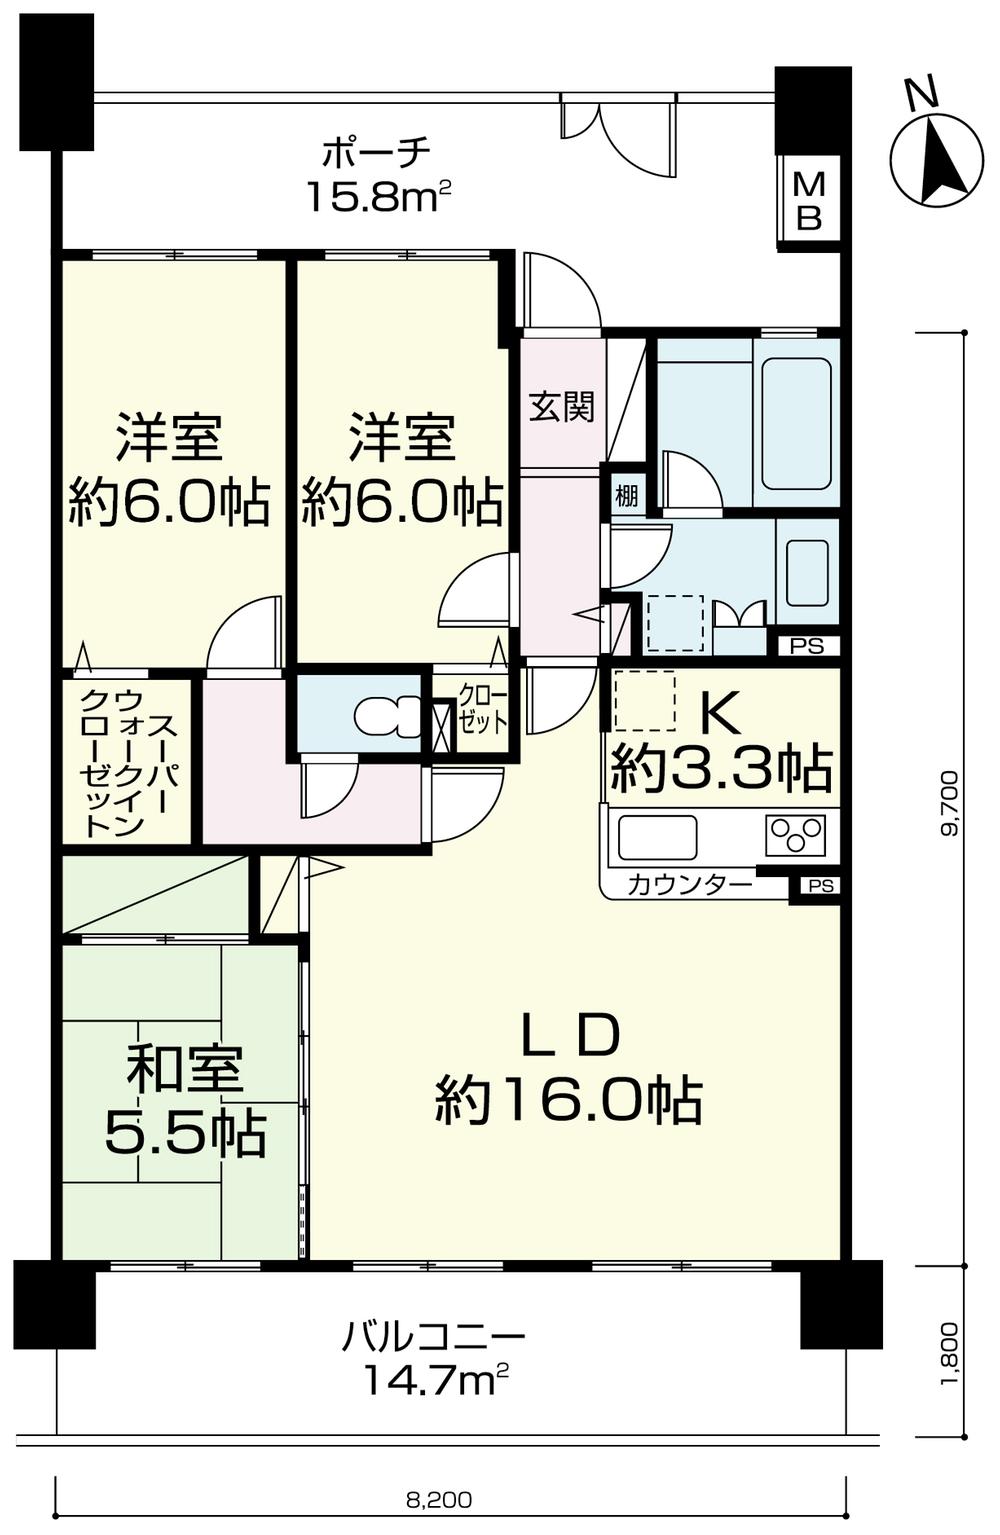 Floor plan. 3LDK, Price 29,800,000 yen, Occupied area 82.36 sq m , Balcony area 14.7 sq m